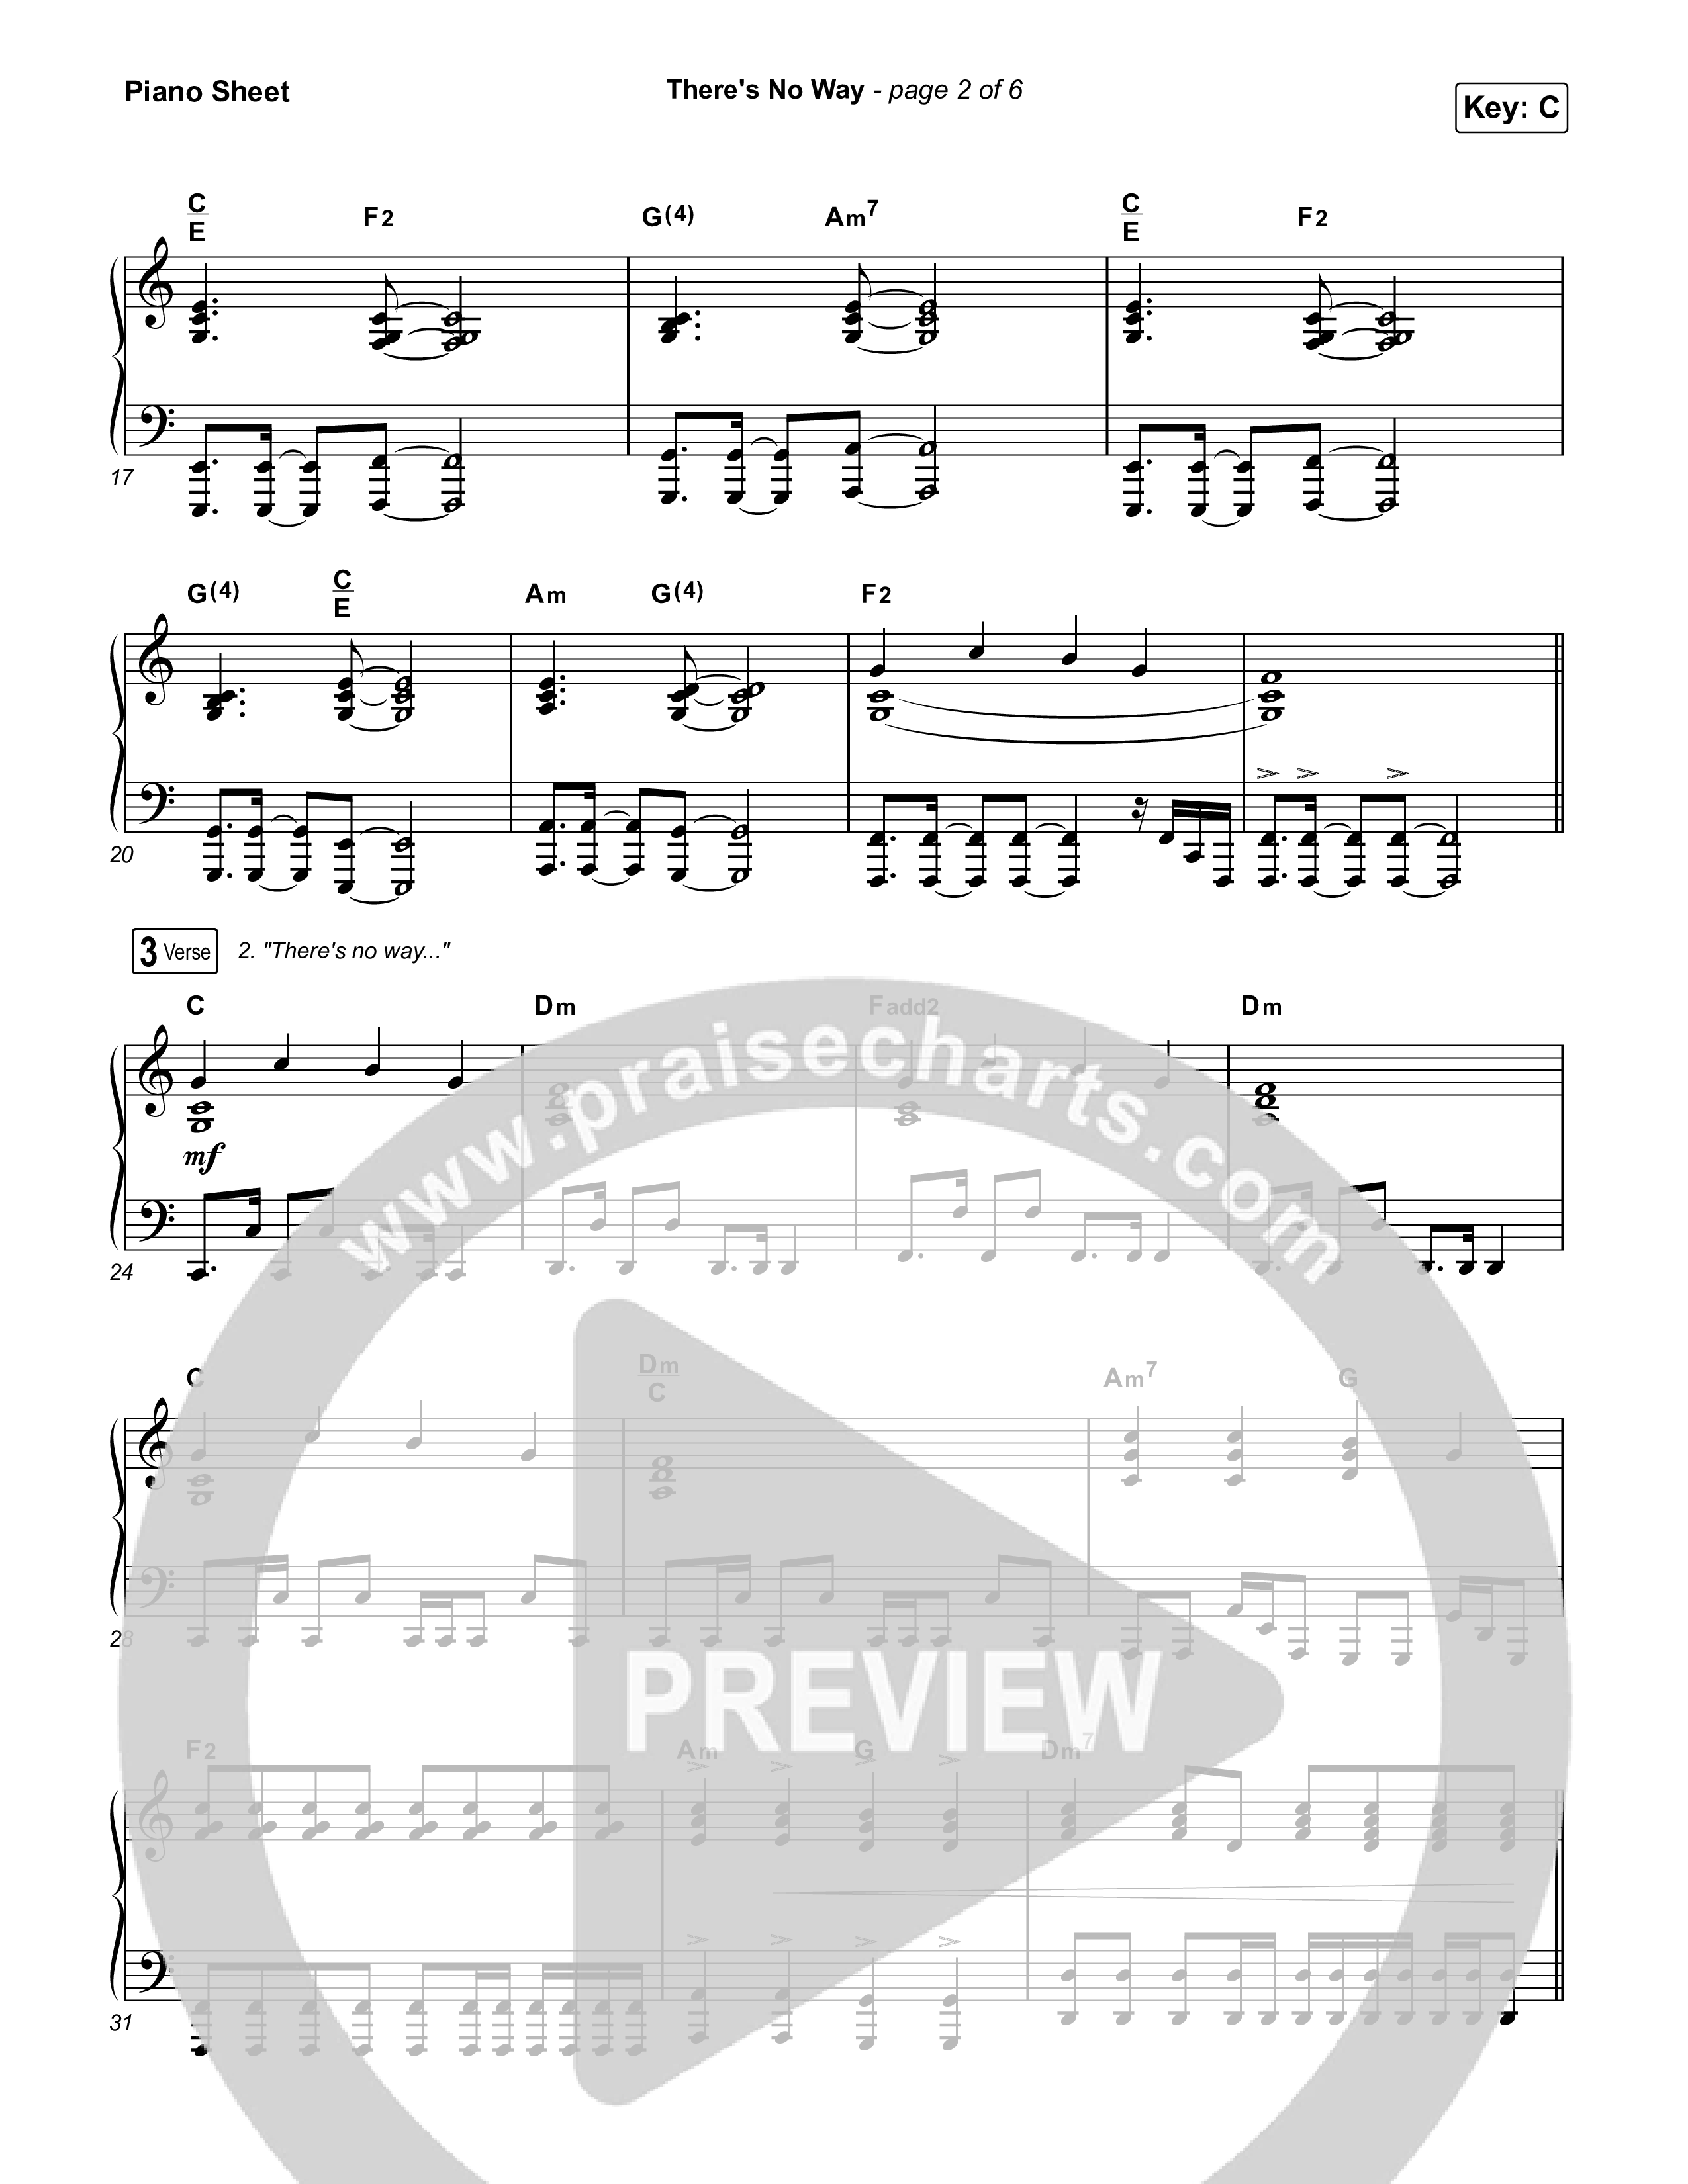 There's No Way Piano Sheet (Red Rocks Worship / Chris Brown)